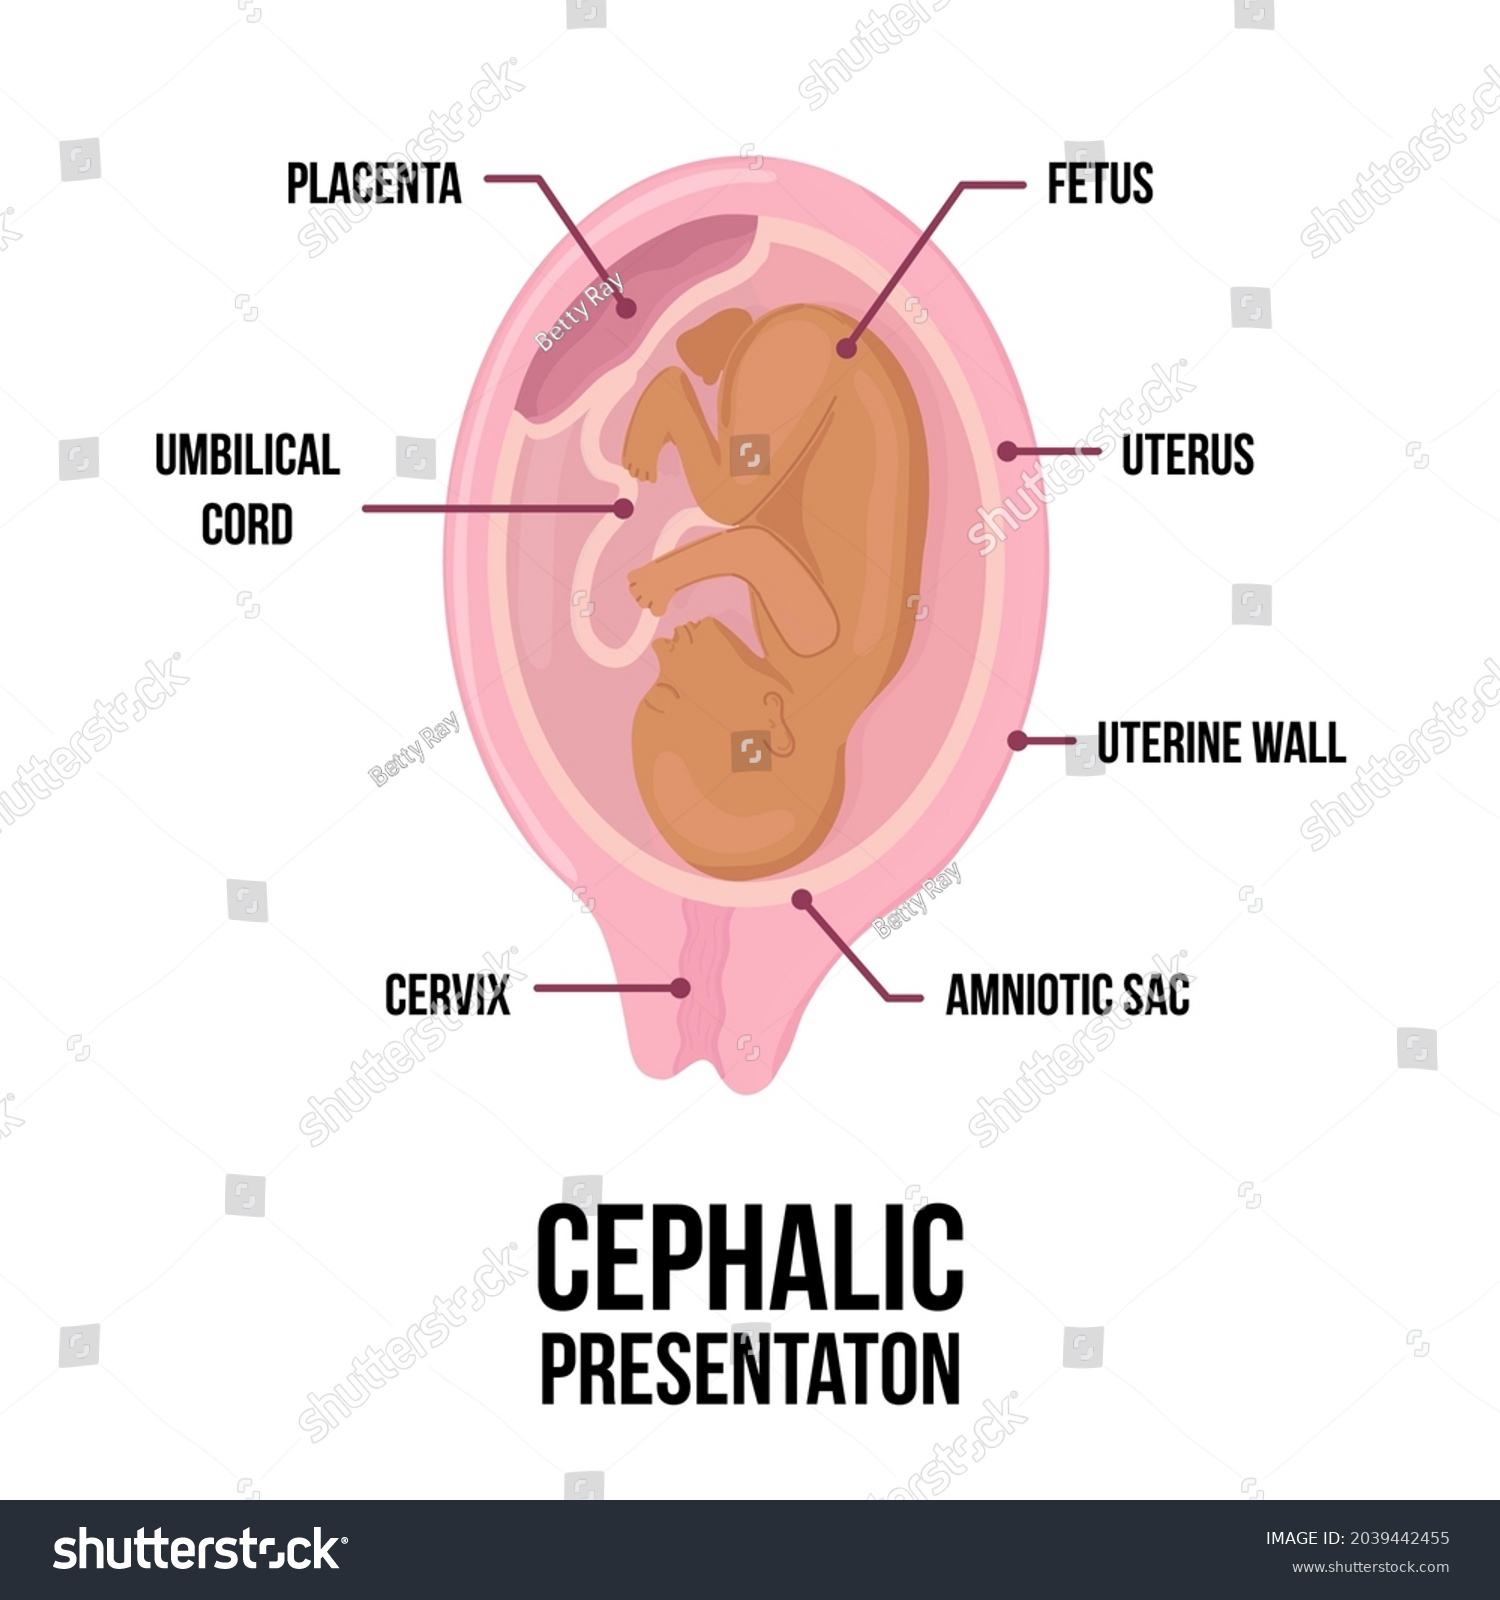 cephalic presentation in pregnancy definition